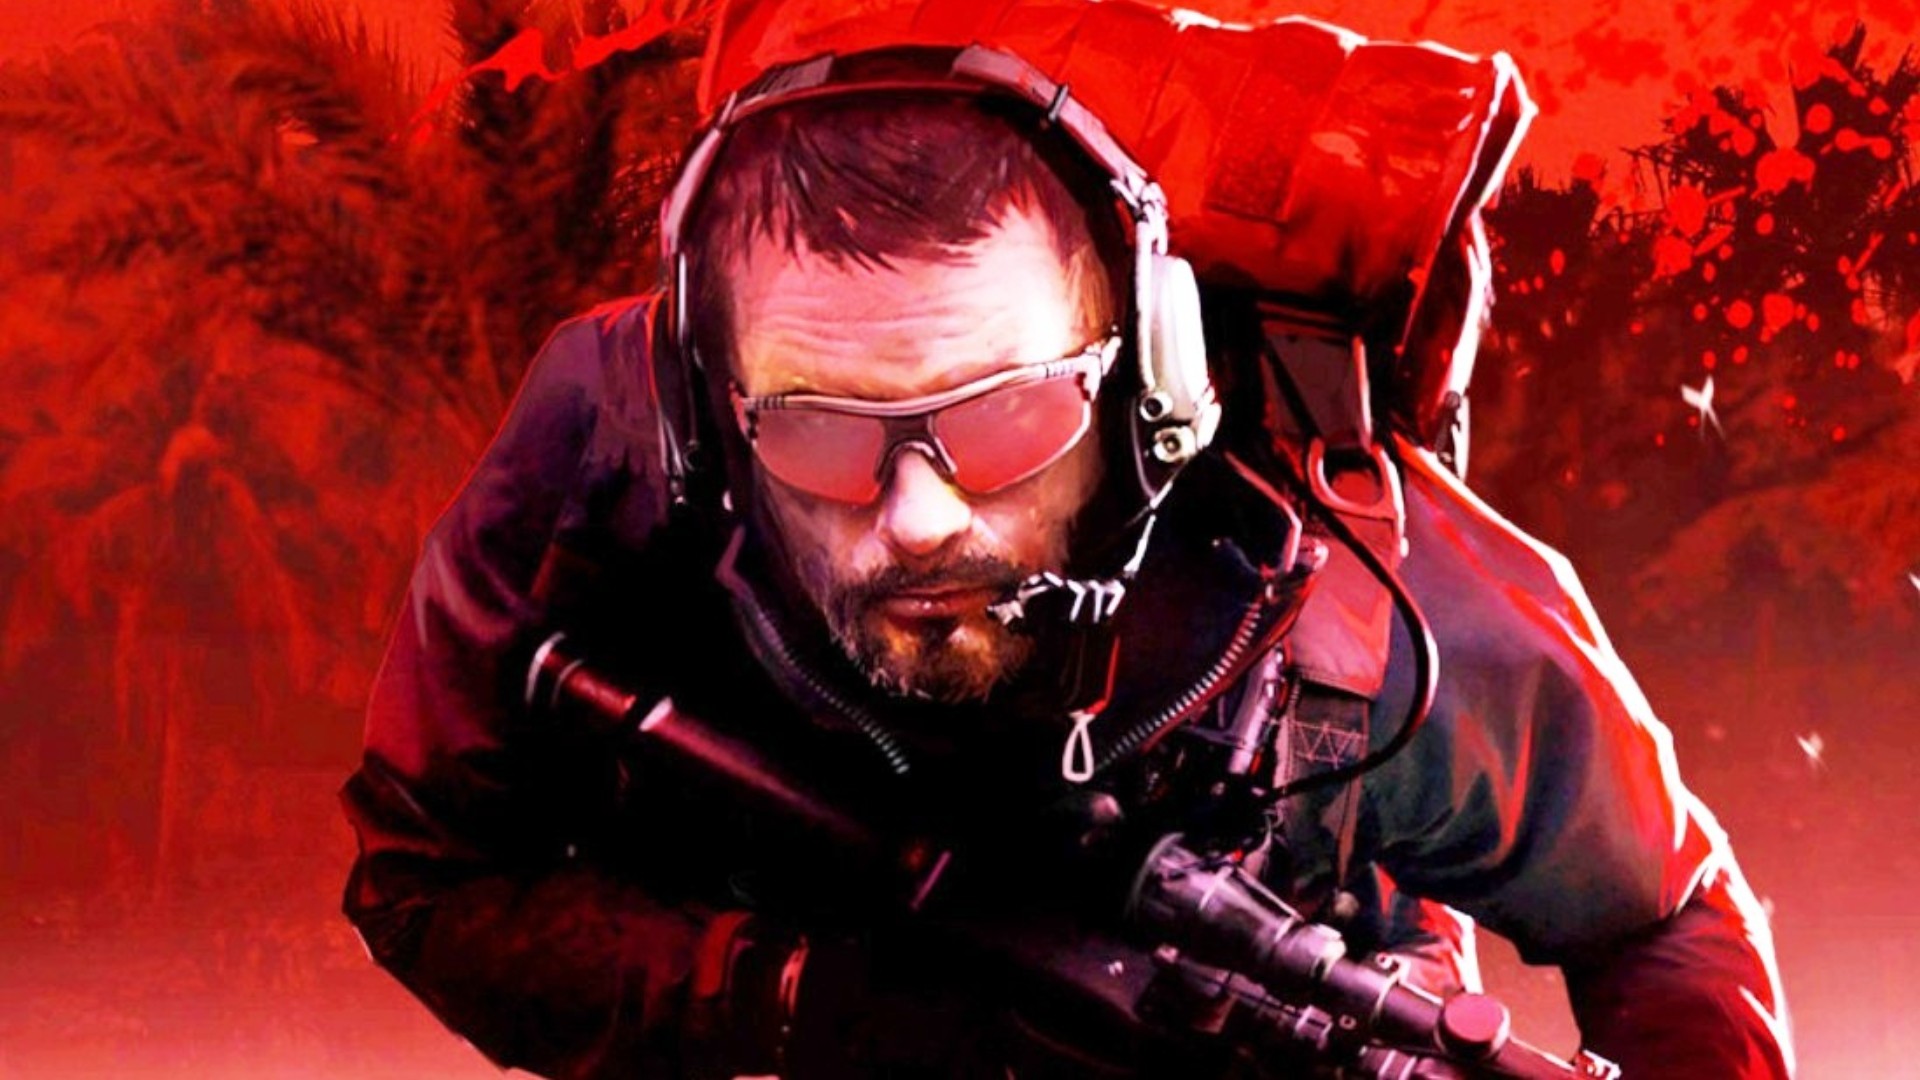 Counter-Strike 2' won't take away your 'CS:GO' skins